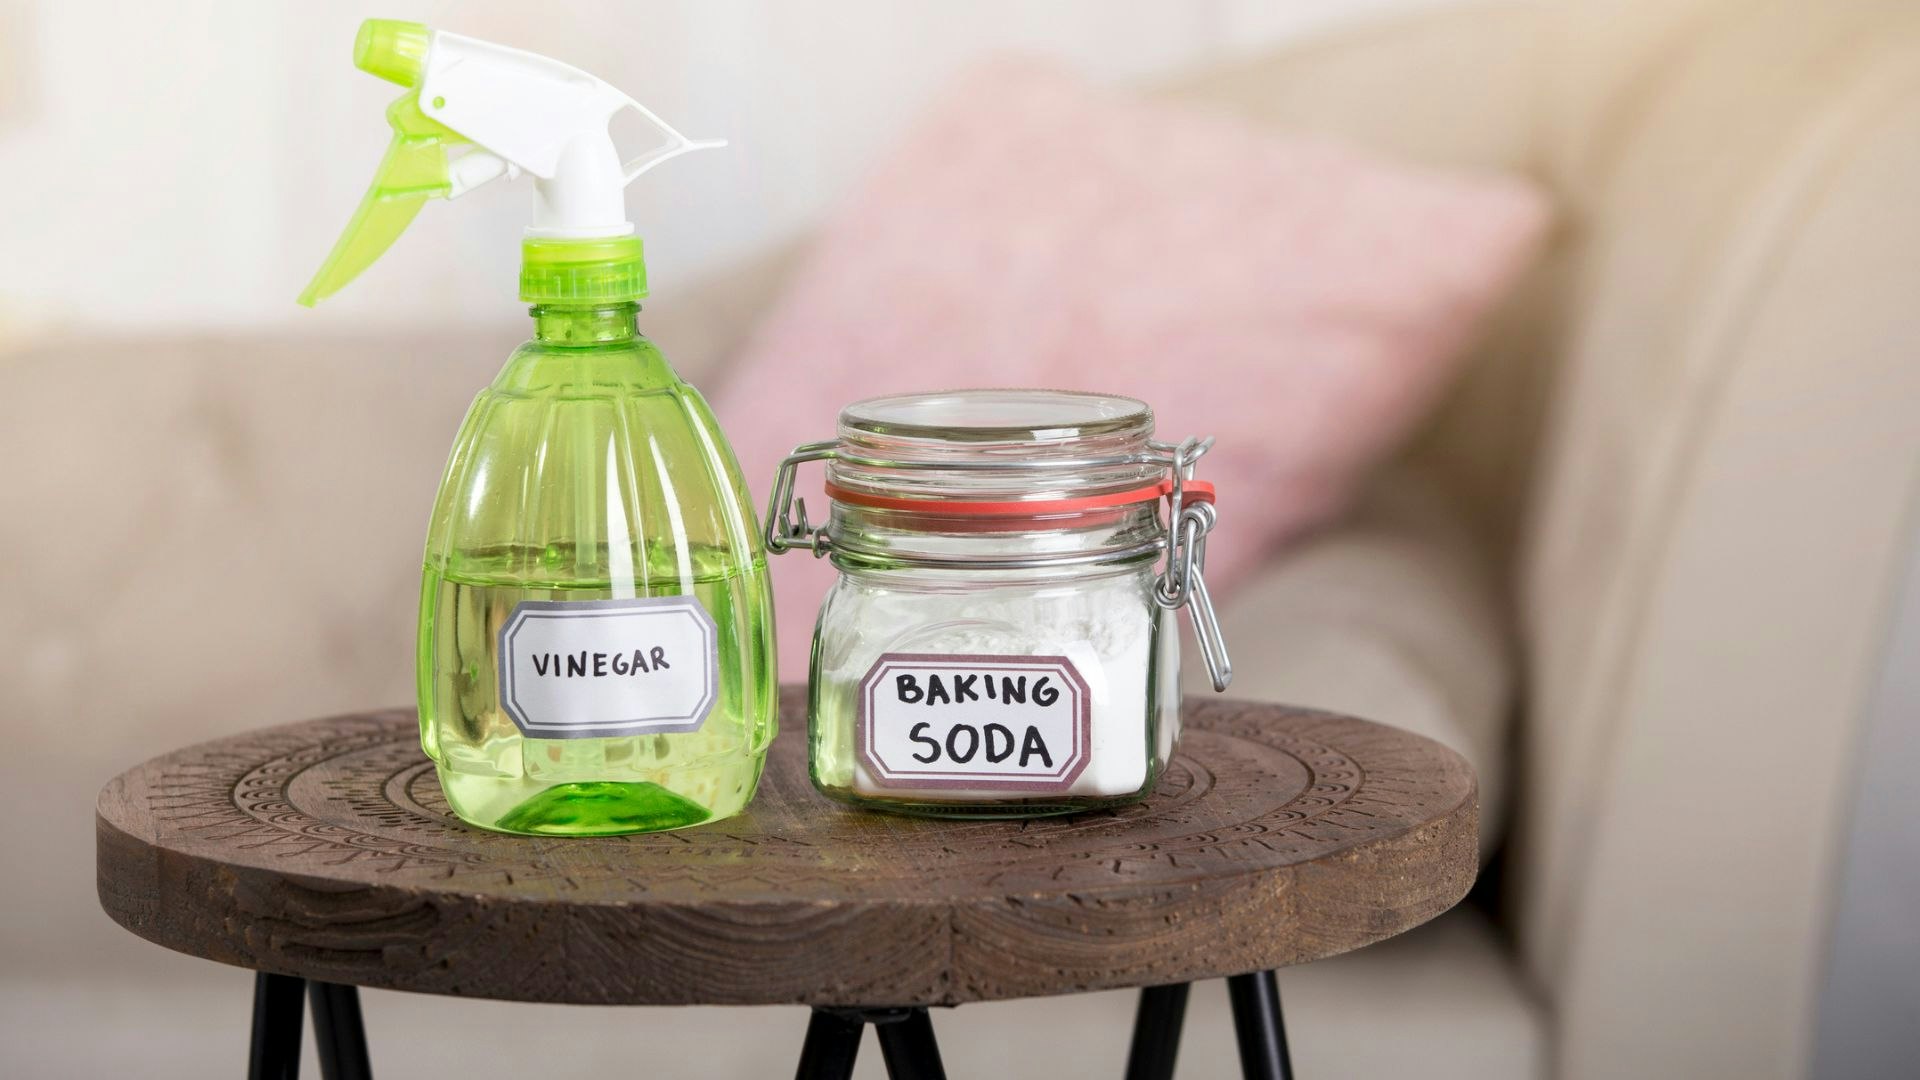 Two key household items: Vinegar and Baking Soda